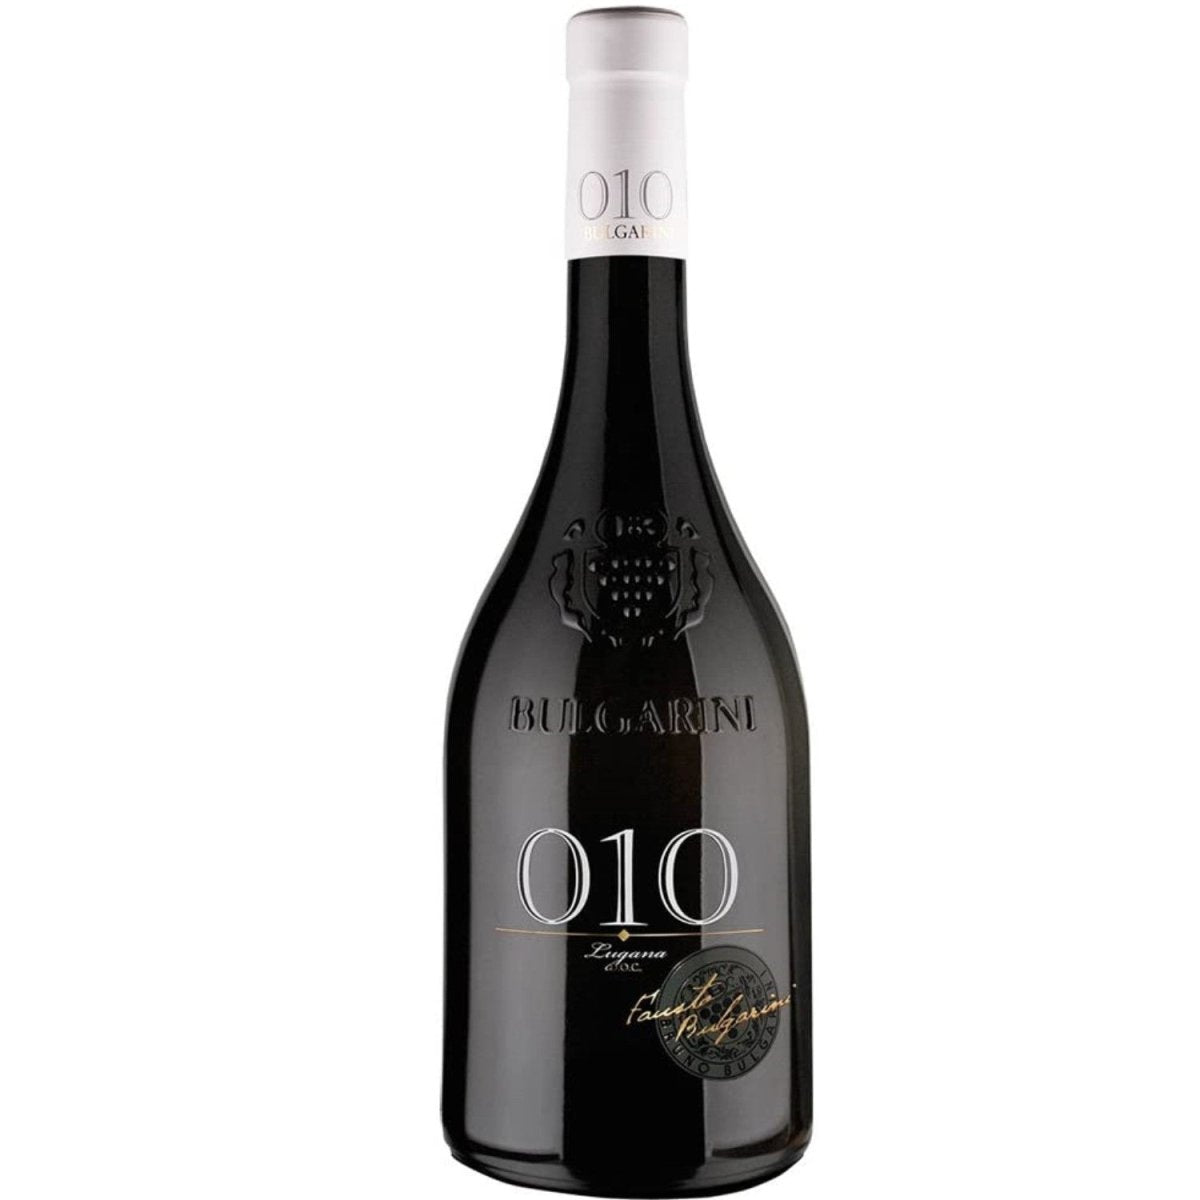 Cantina Bulgarini 010 Lugana DOC Weißwein Wein trocken Italien (1 x 0.75l) - Versanel -